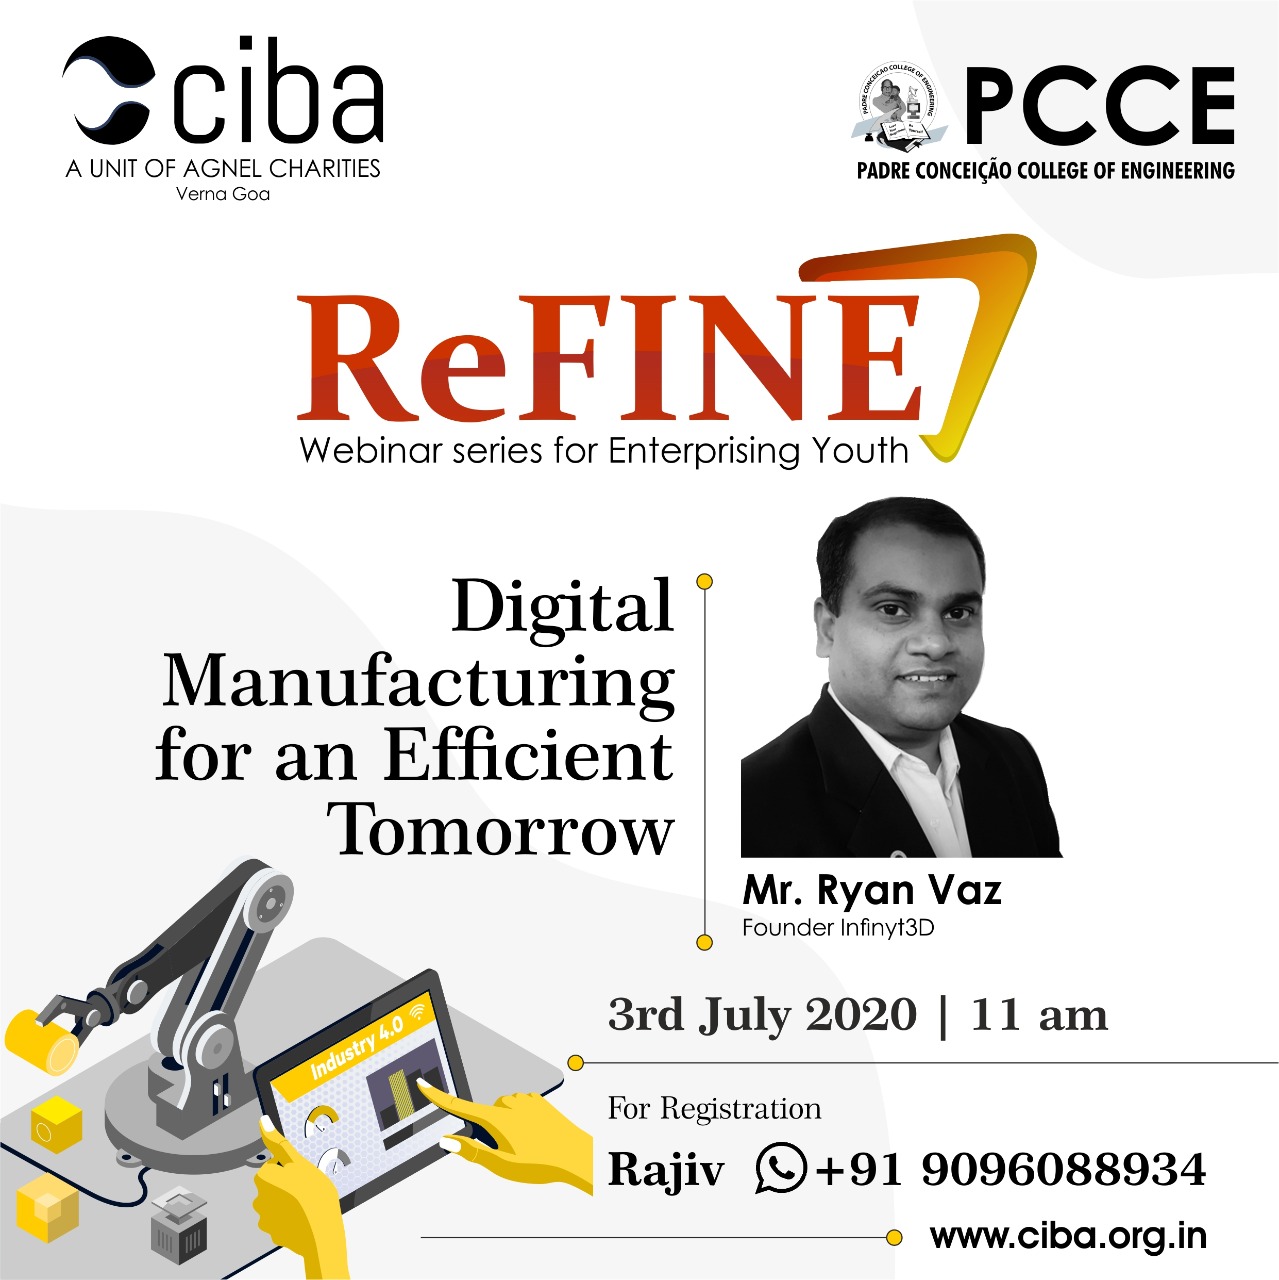 ciba-ReFINE- Digital Manufacturing for an Efficient Tomorrow